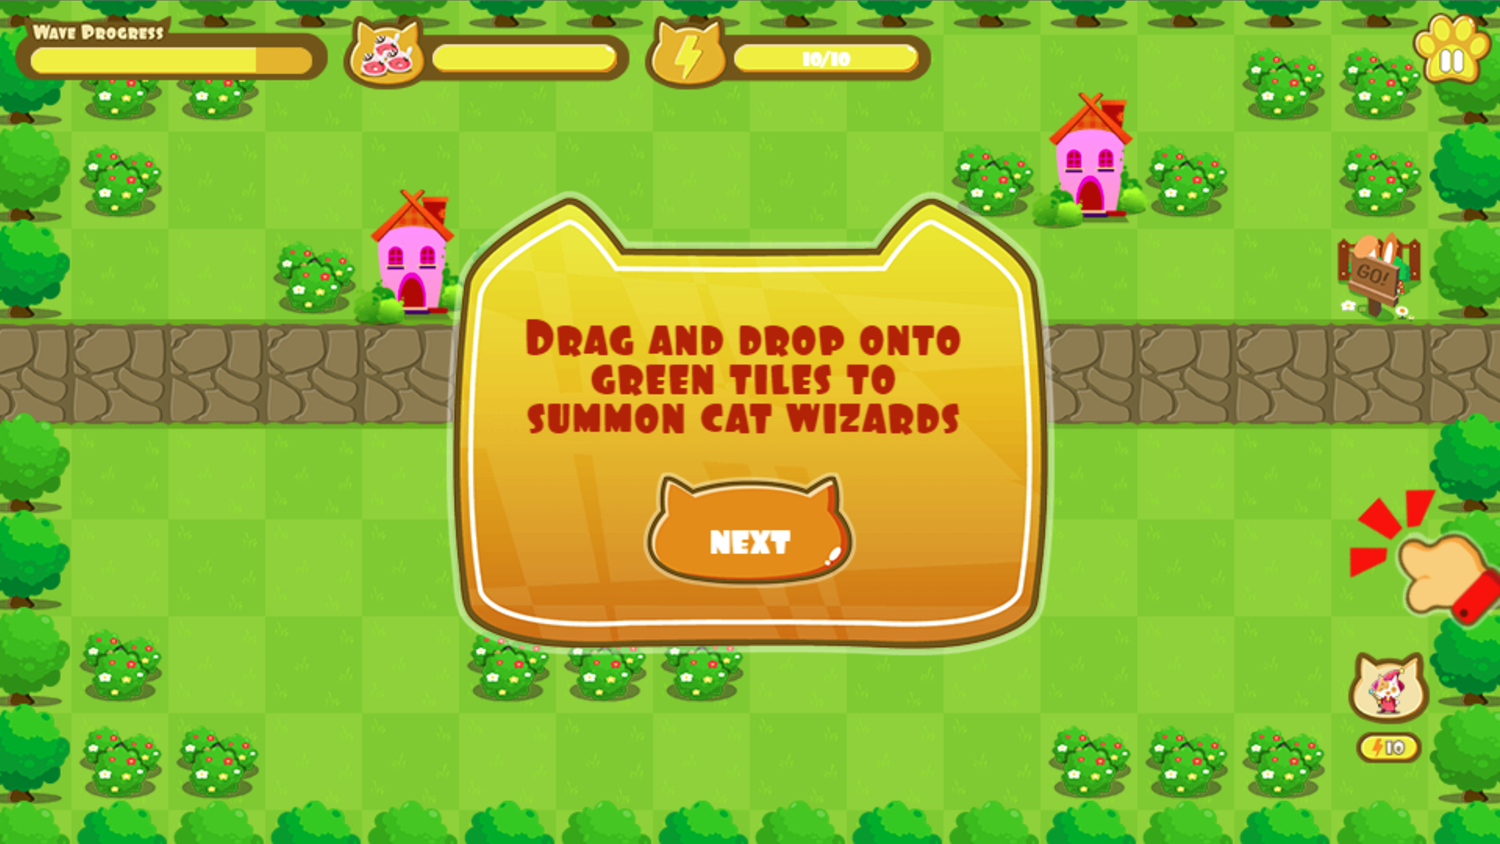 Cat Wizard Defense Game Summon a Cat Wizard Instructions Screen Screenshot.